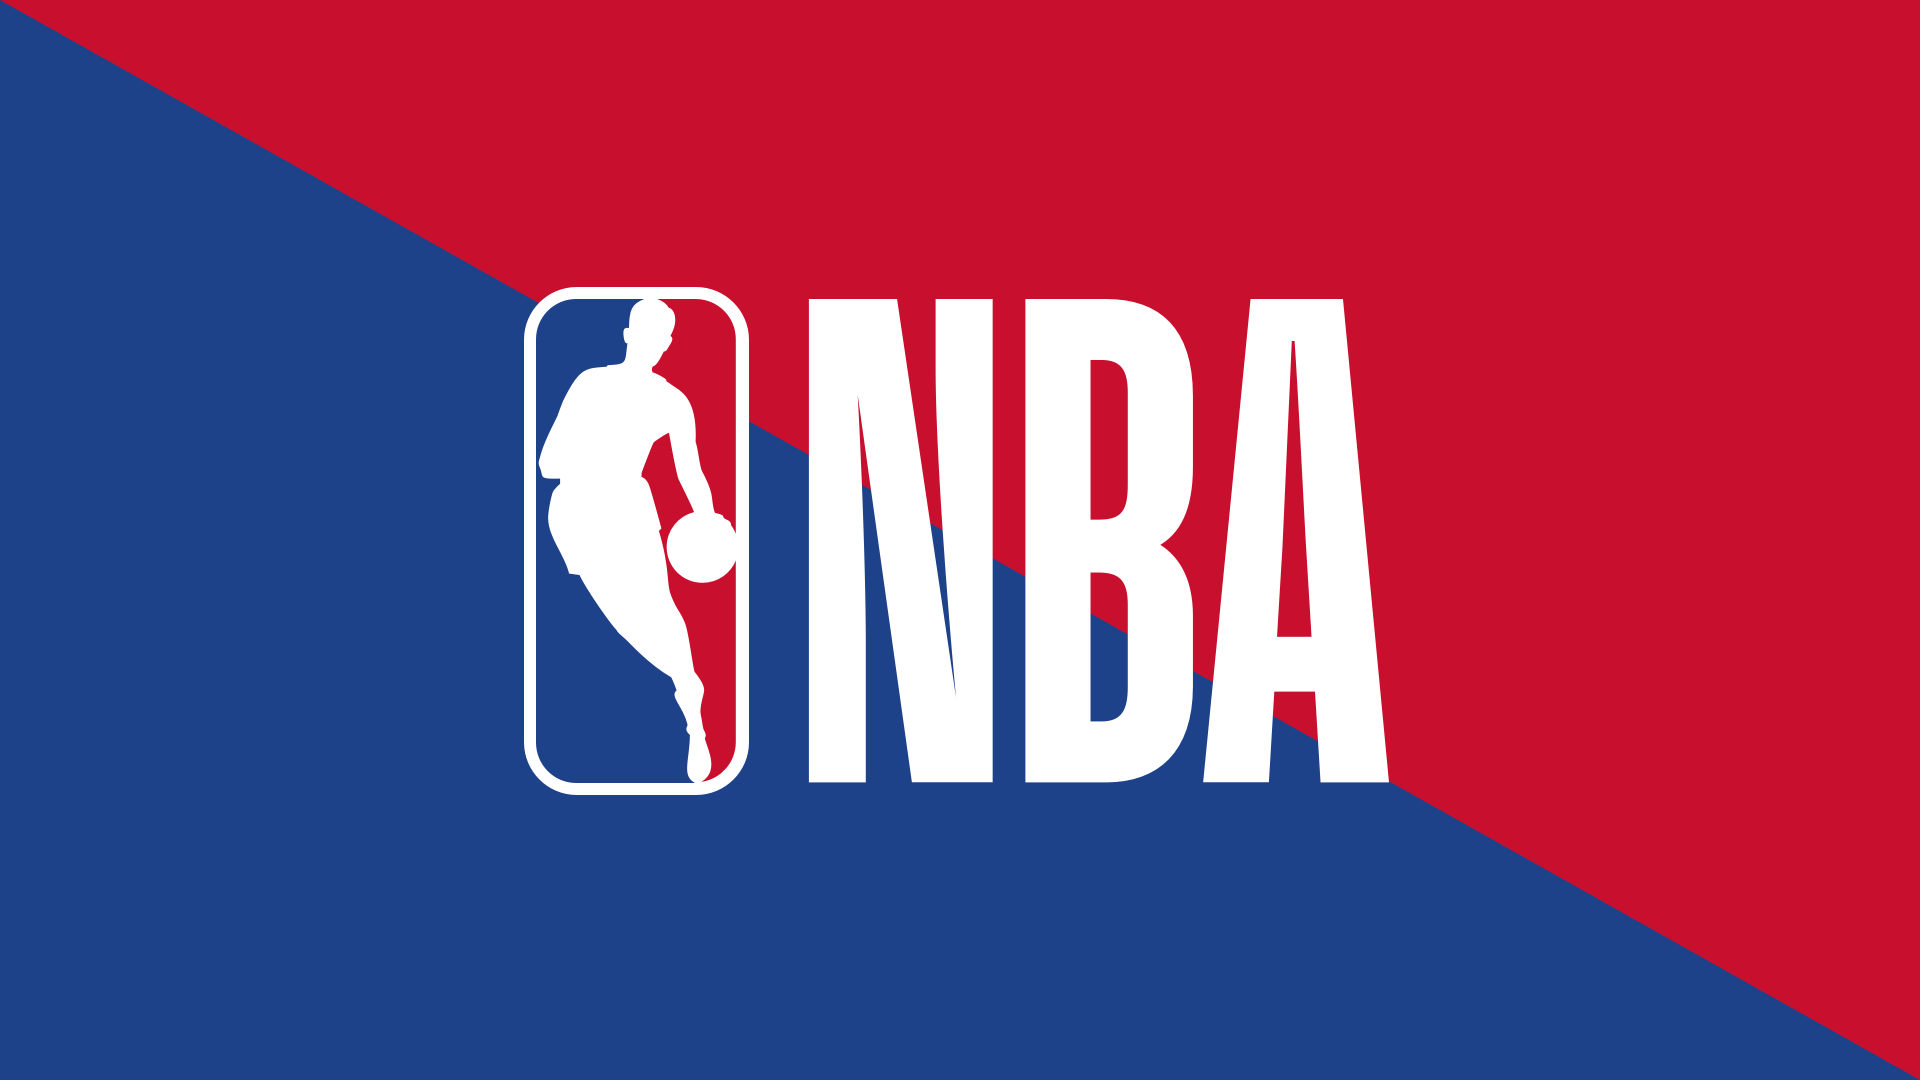 NBA Teambyteam breakdown for 2020 and 2021 free agency